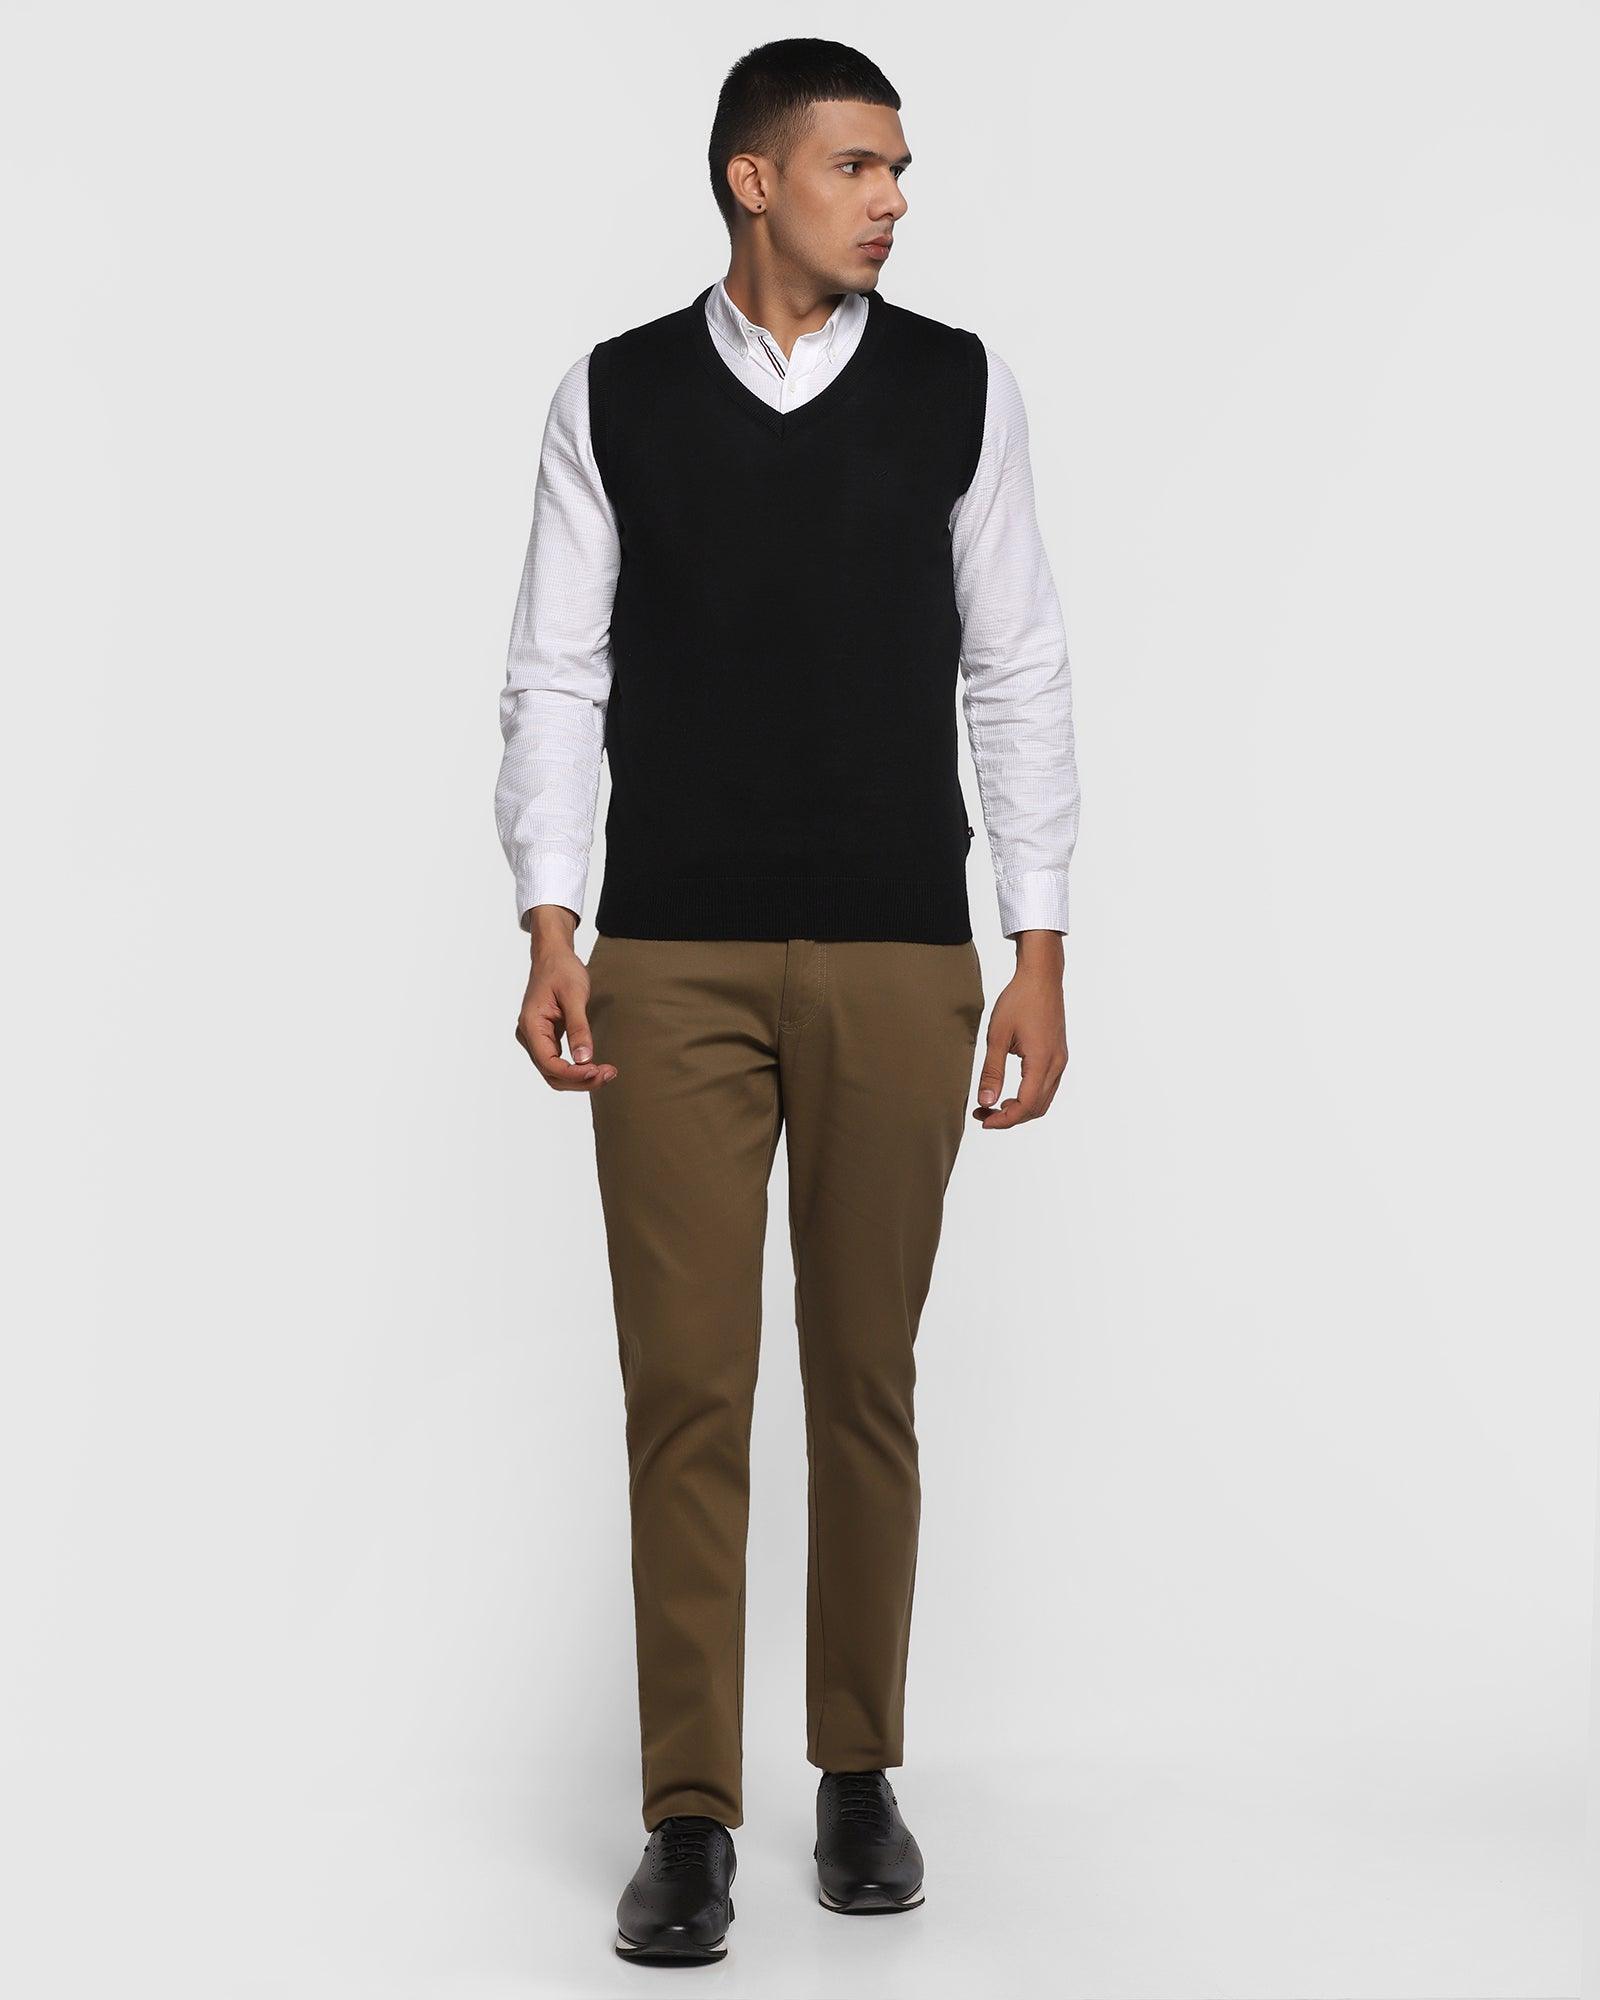 V-Neck Black Solid Sweater - Xavior